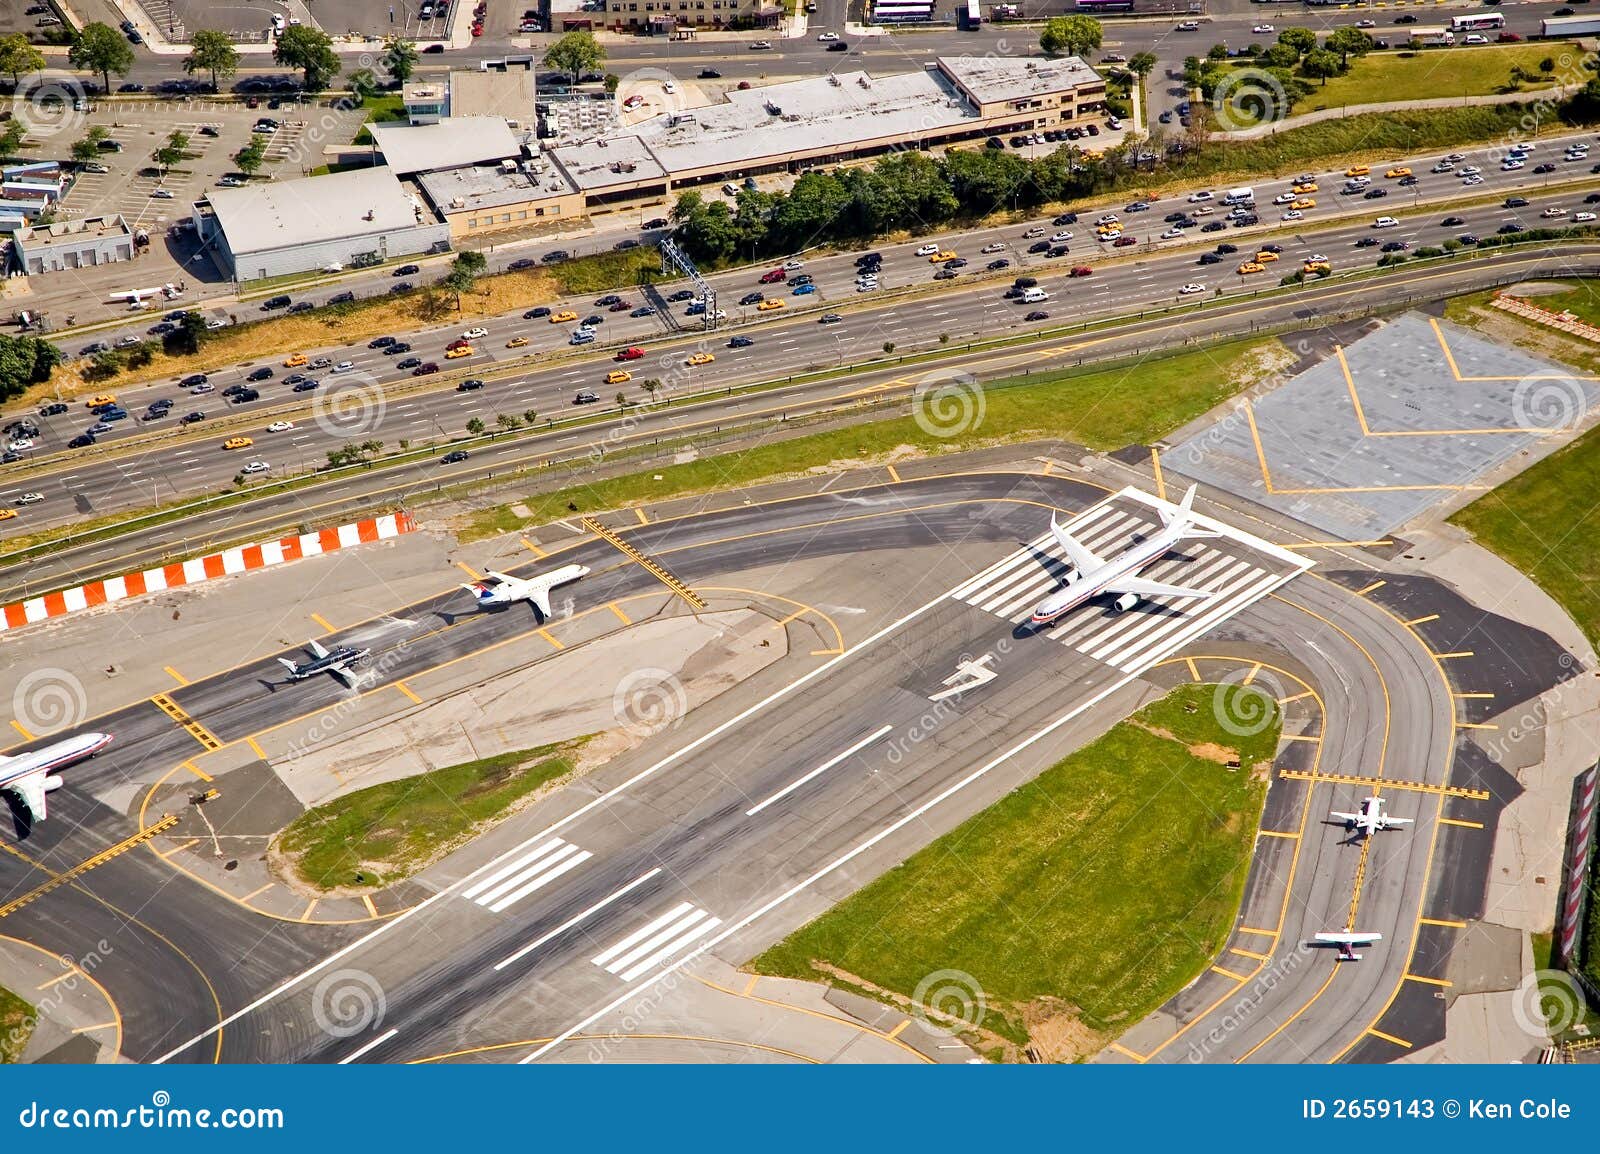 clipart airport runway - photo #44